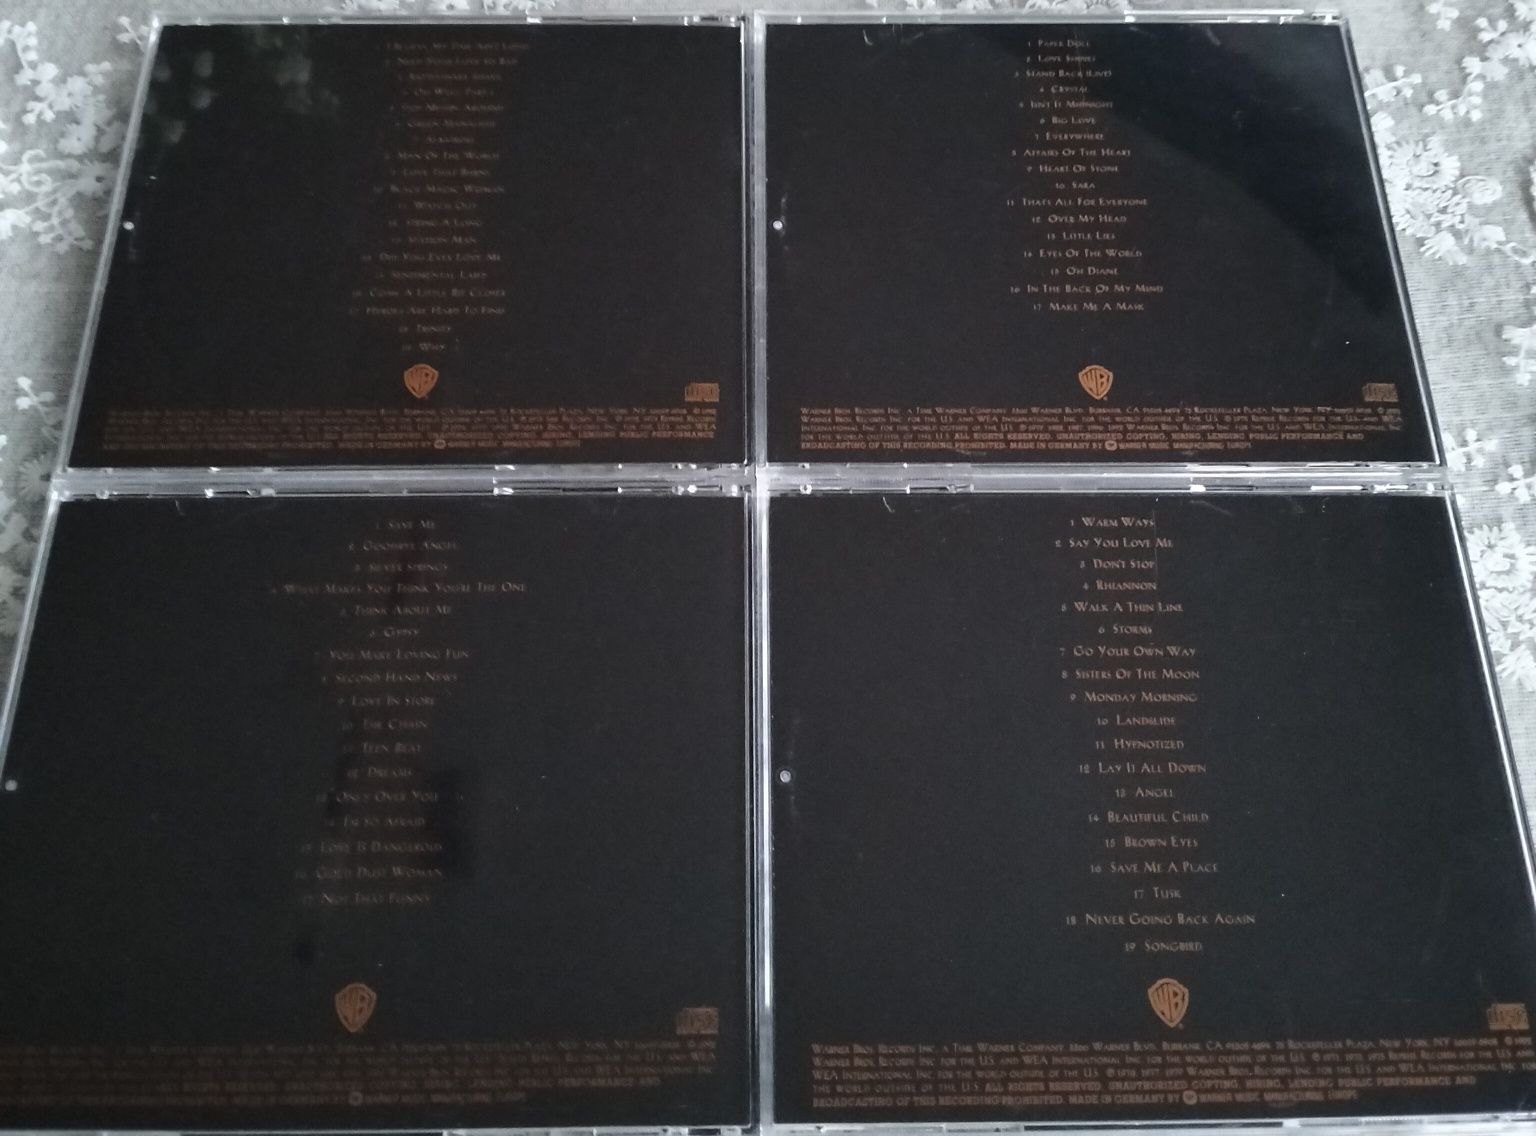 Fleetwood Mac - 25 years The Chain 4 CD